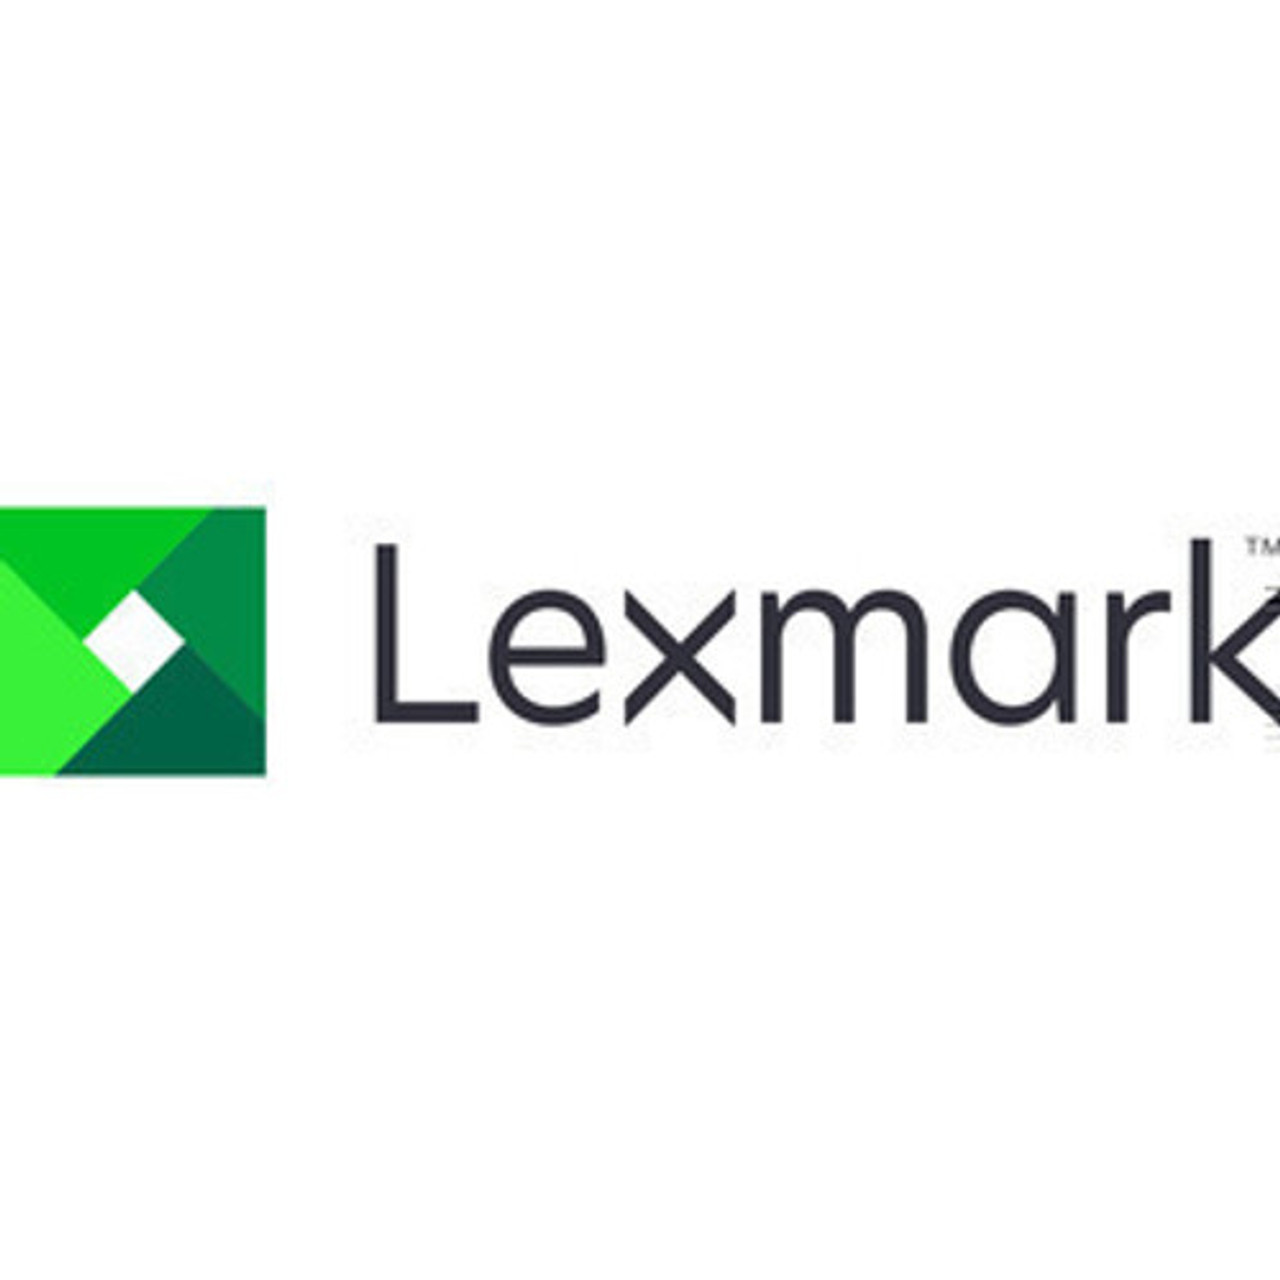 Lexmark C53030X Photoconductor Unit Kit Single For use in C520, 522, 524, 530, 532, 534 Estimated yield 20K - C53030X